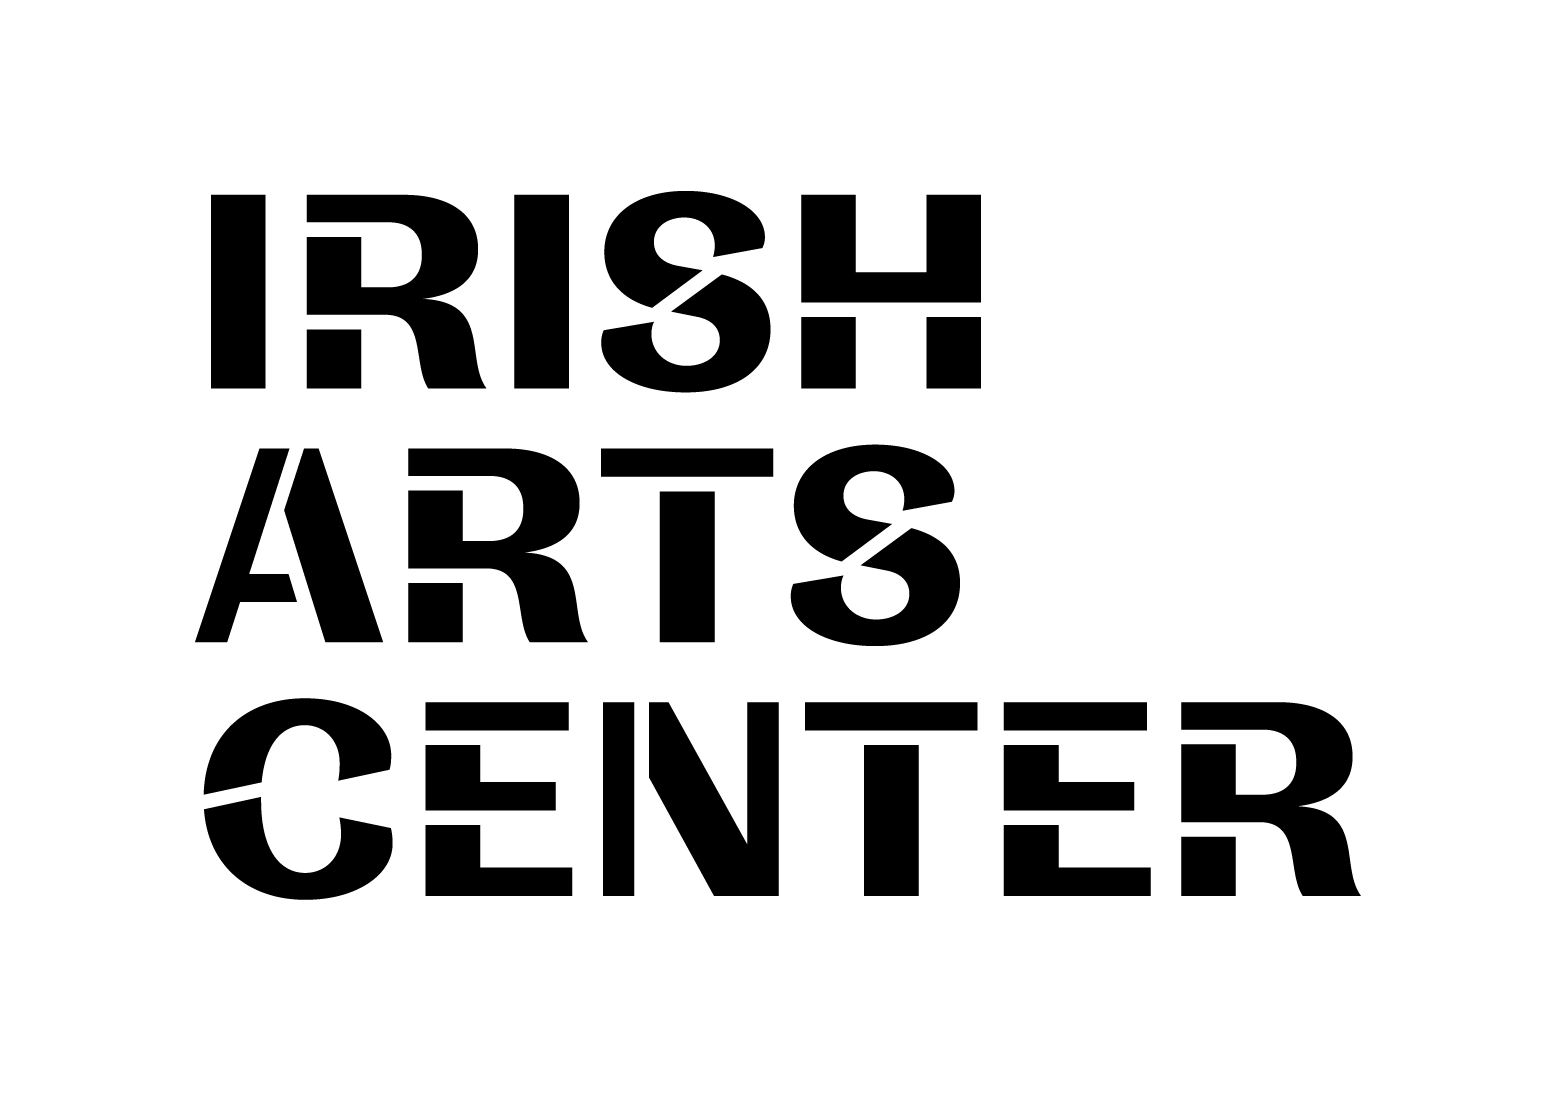 Logo with stencil-effect text: Irish Arts Center